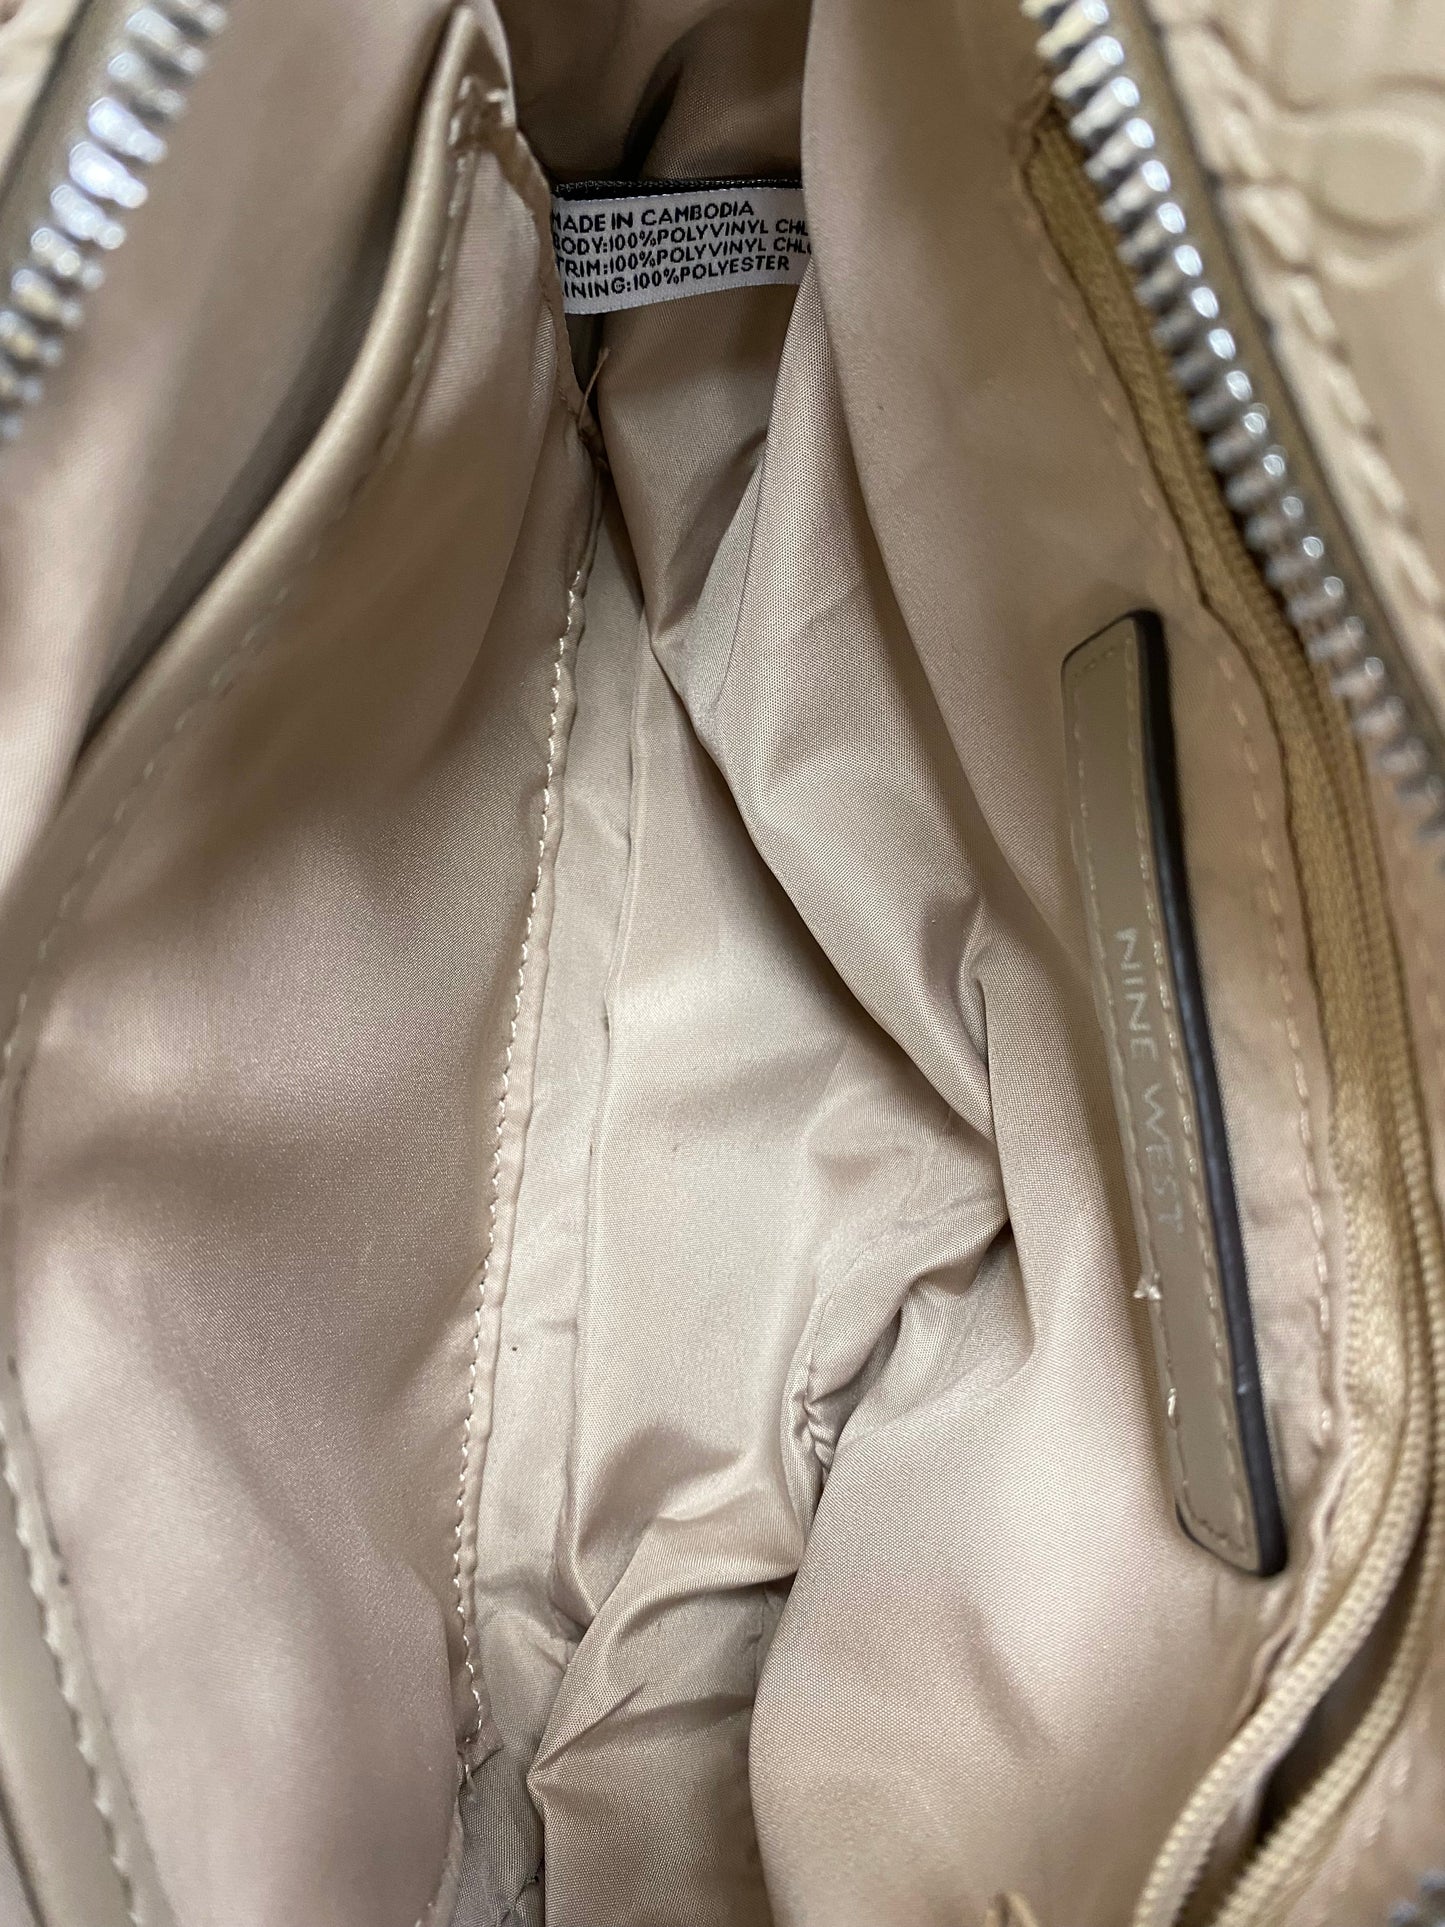 Handbag By Nine West  Size: Small